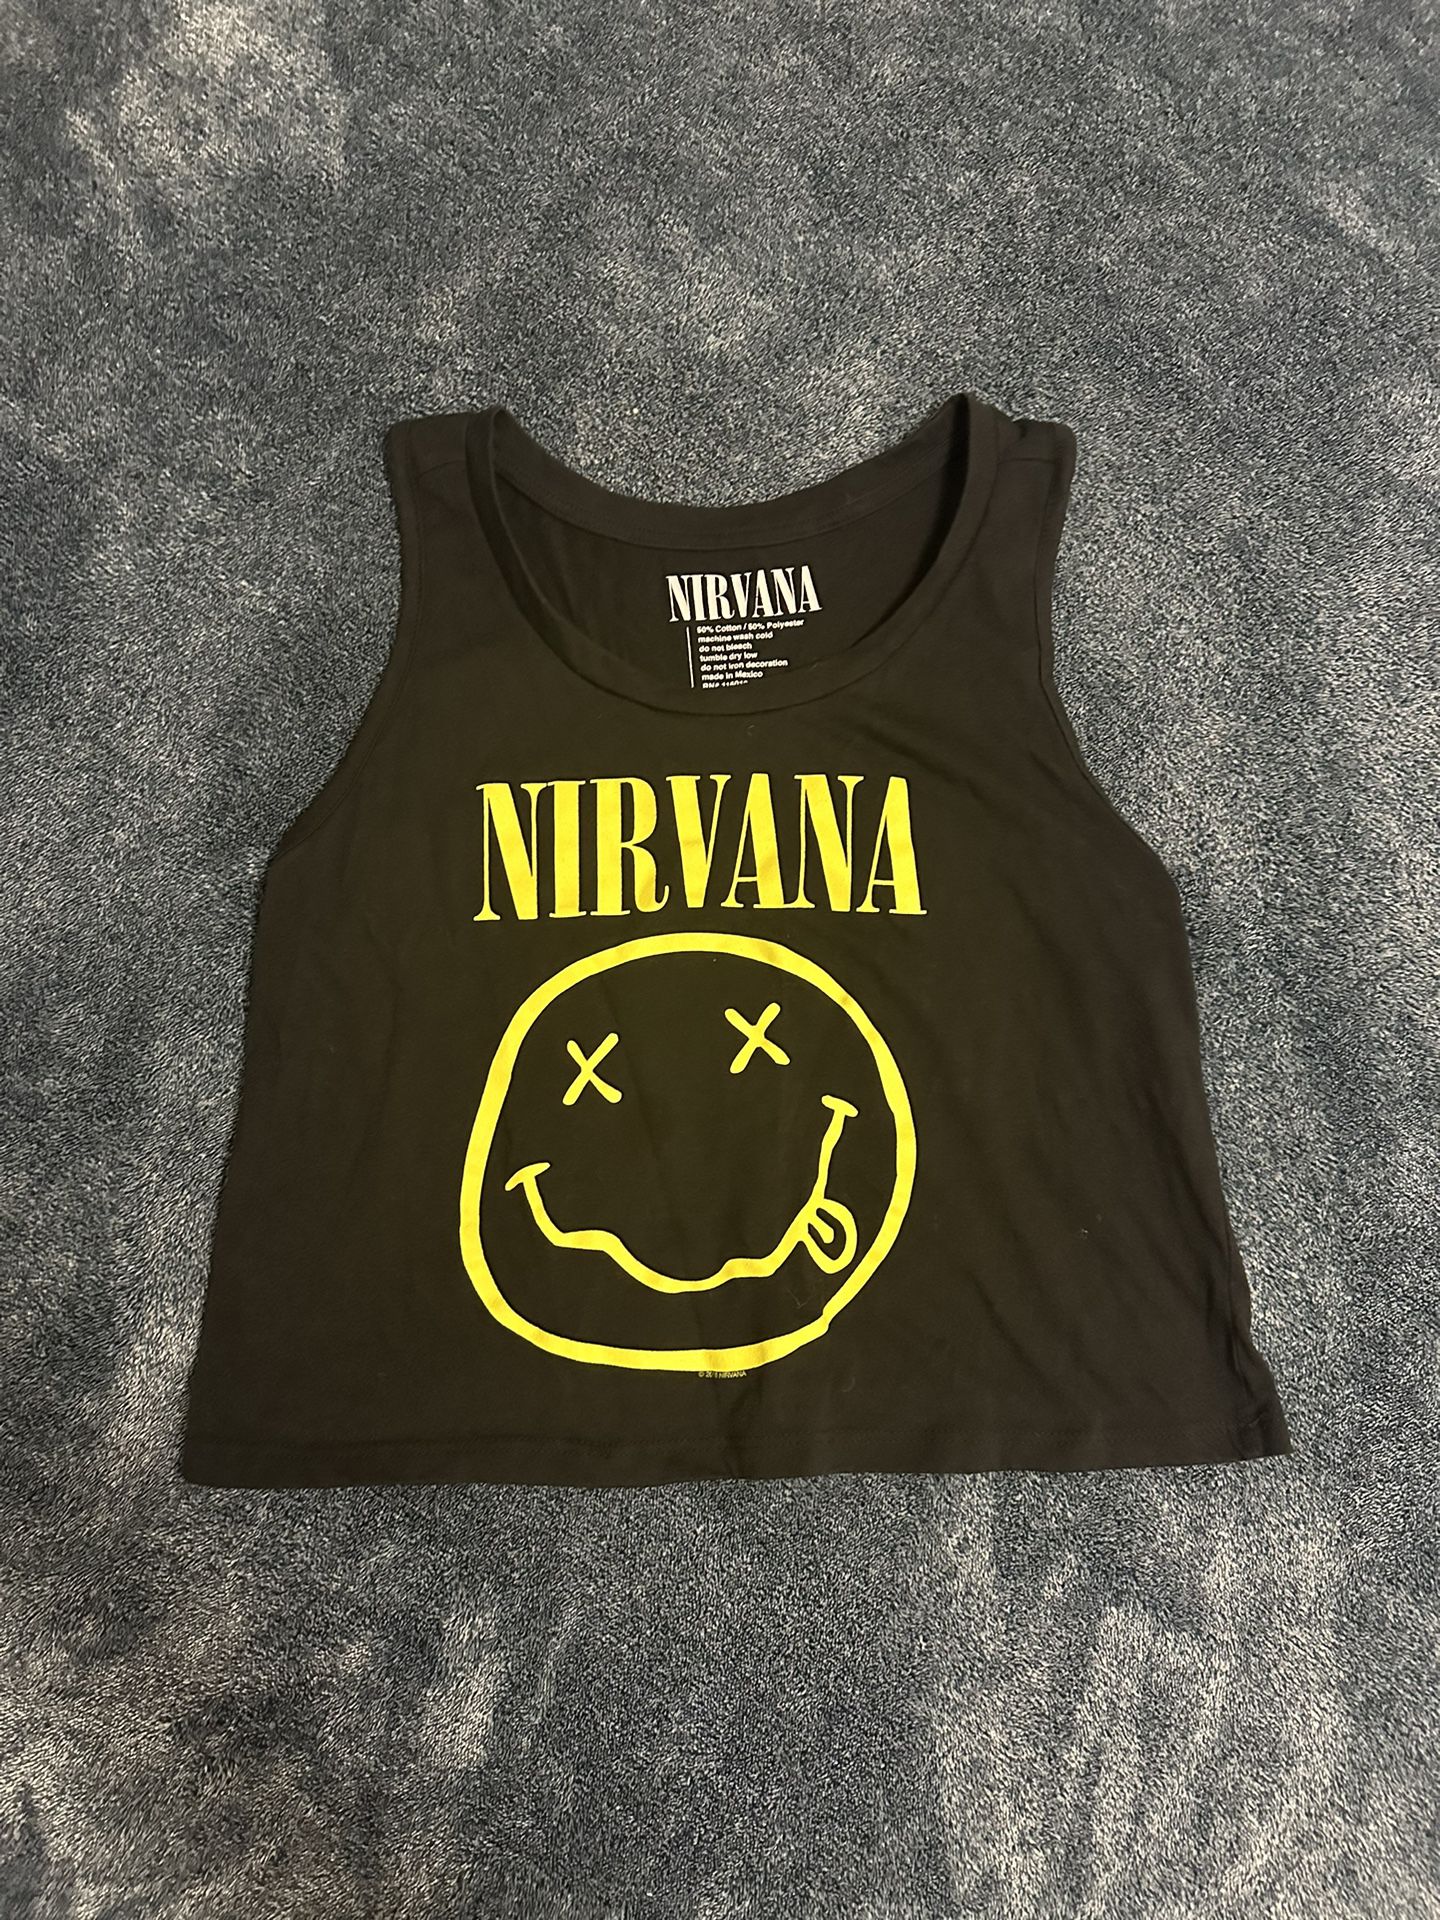 Nirvana cropped shirt 